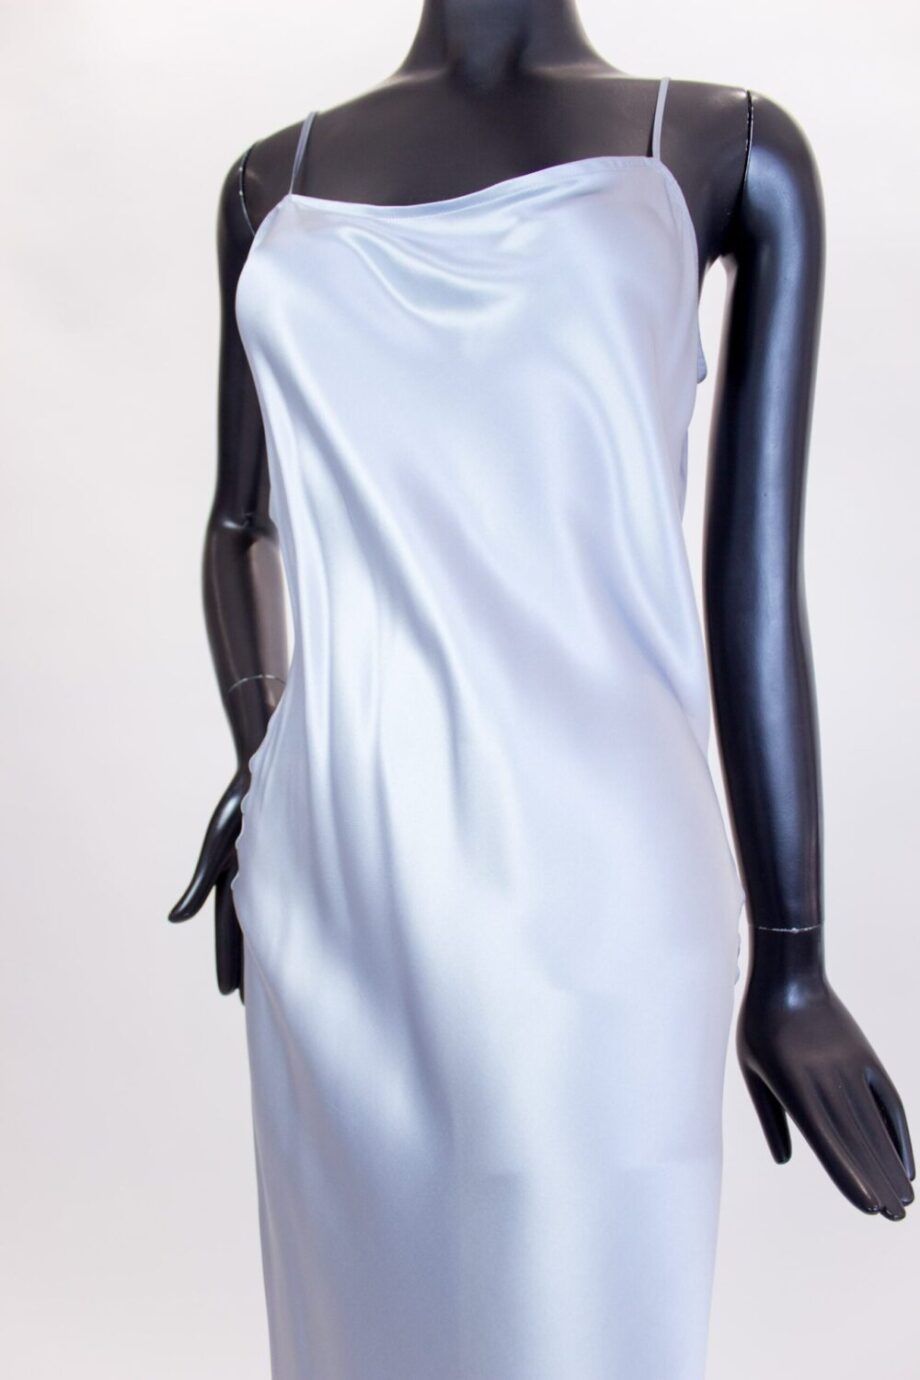 Future Ozbek light blue silk dress front close